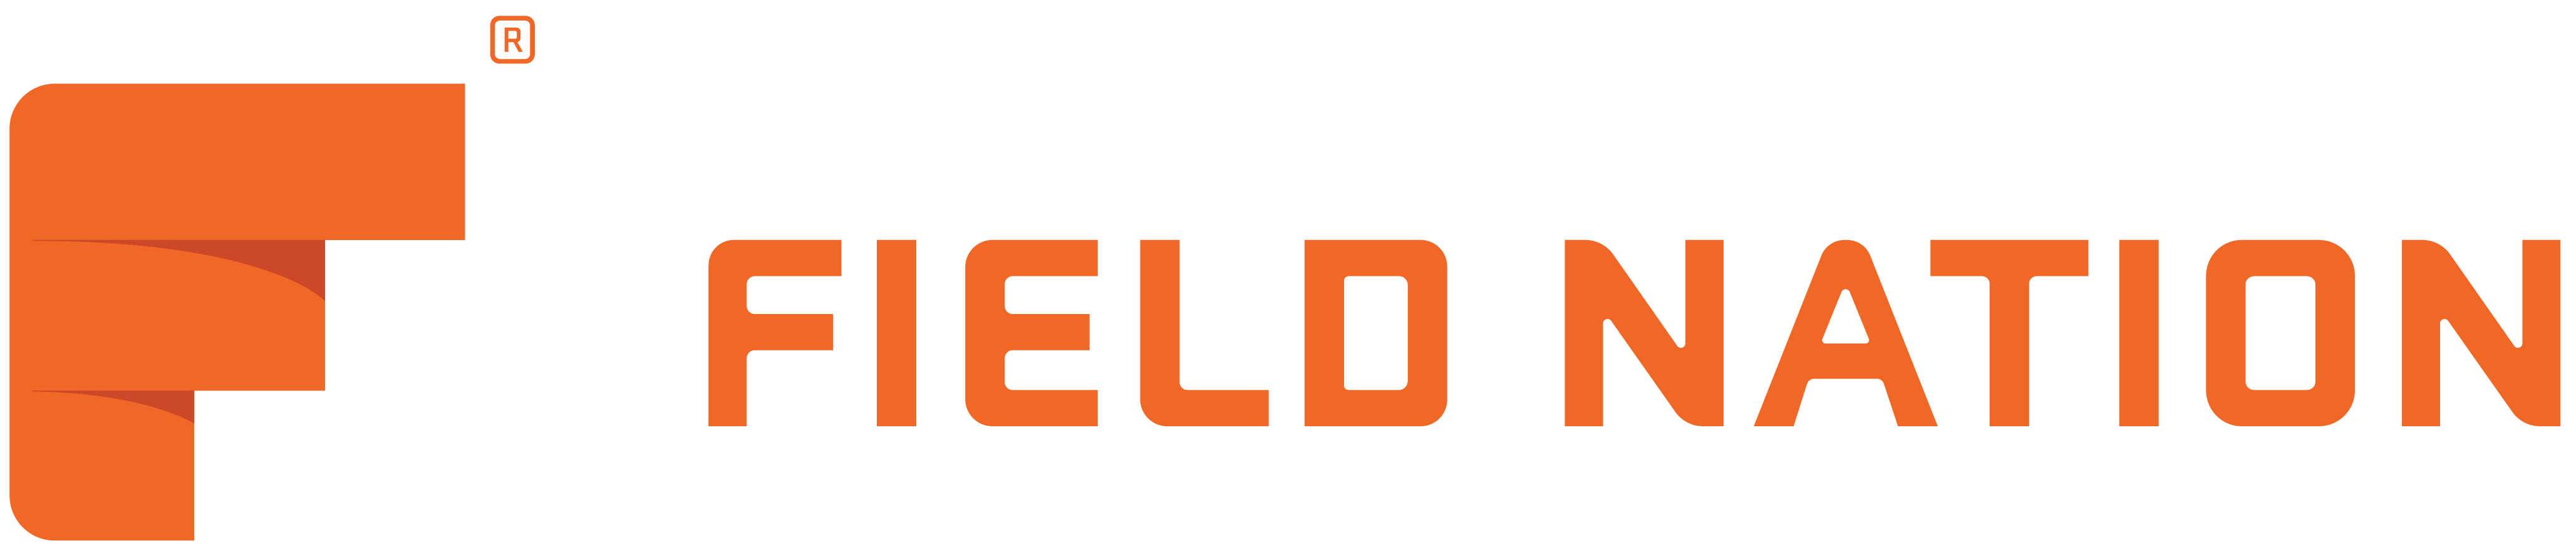 Field Nation logo